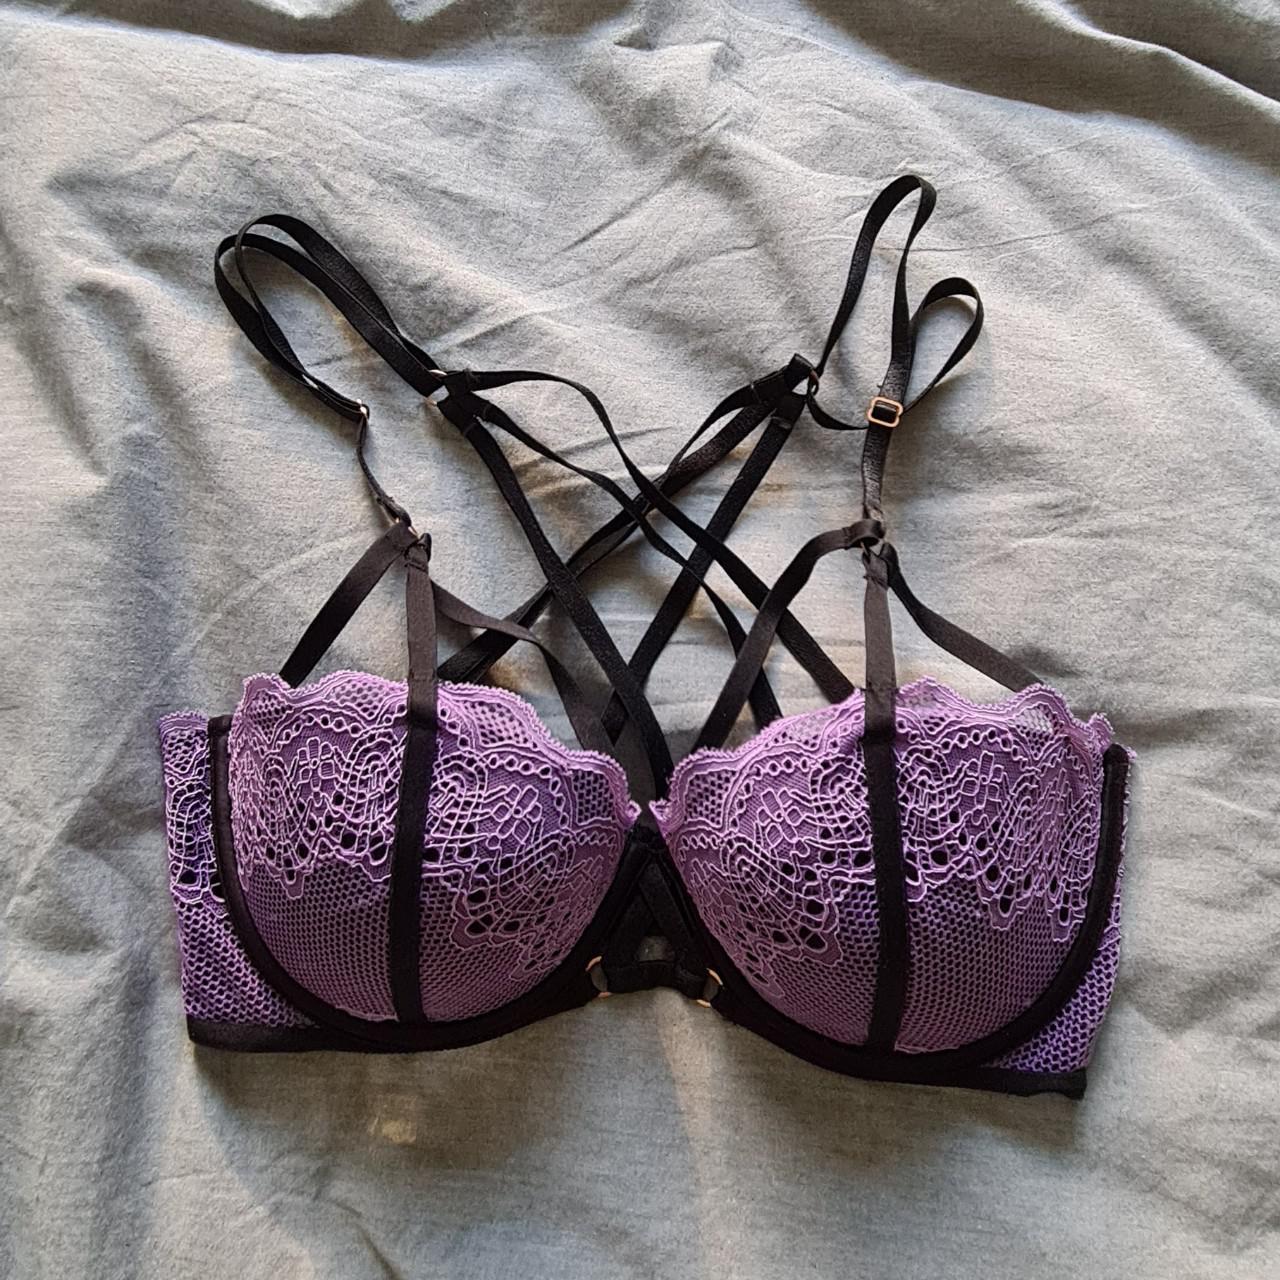 Ann summers purple black Lacey bra strappy style.